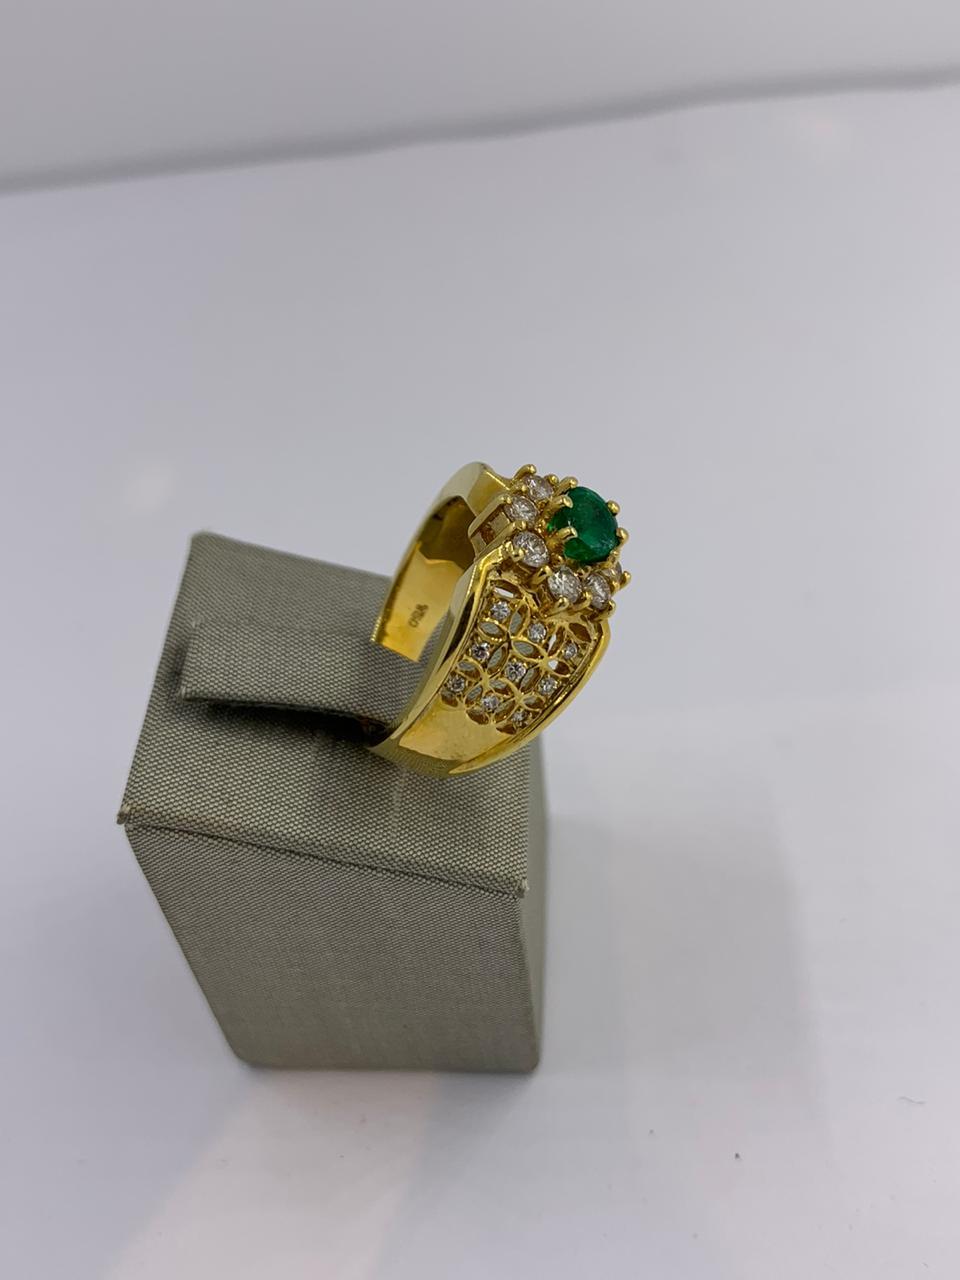 Emerald and Diamond Ring
set in 18kt Yellow Gold
Emerald 0.46 ct
Diamond 0.71 ct
21-11405